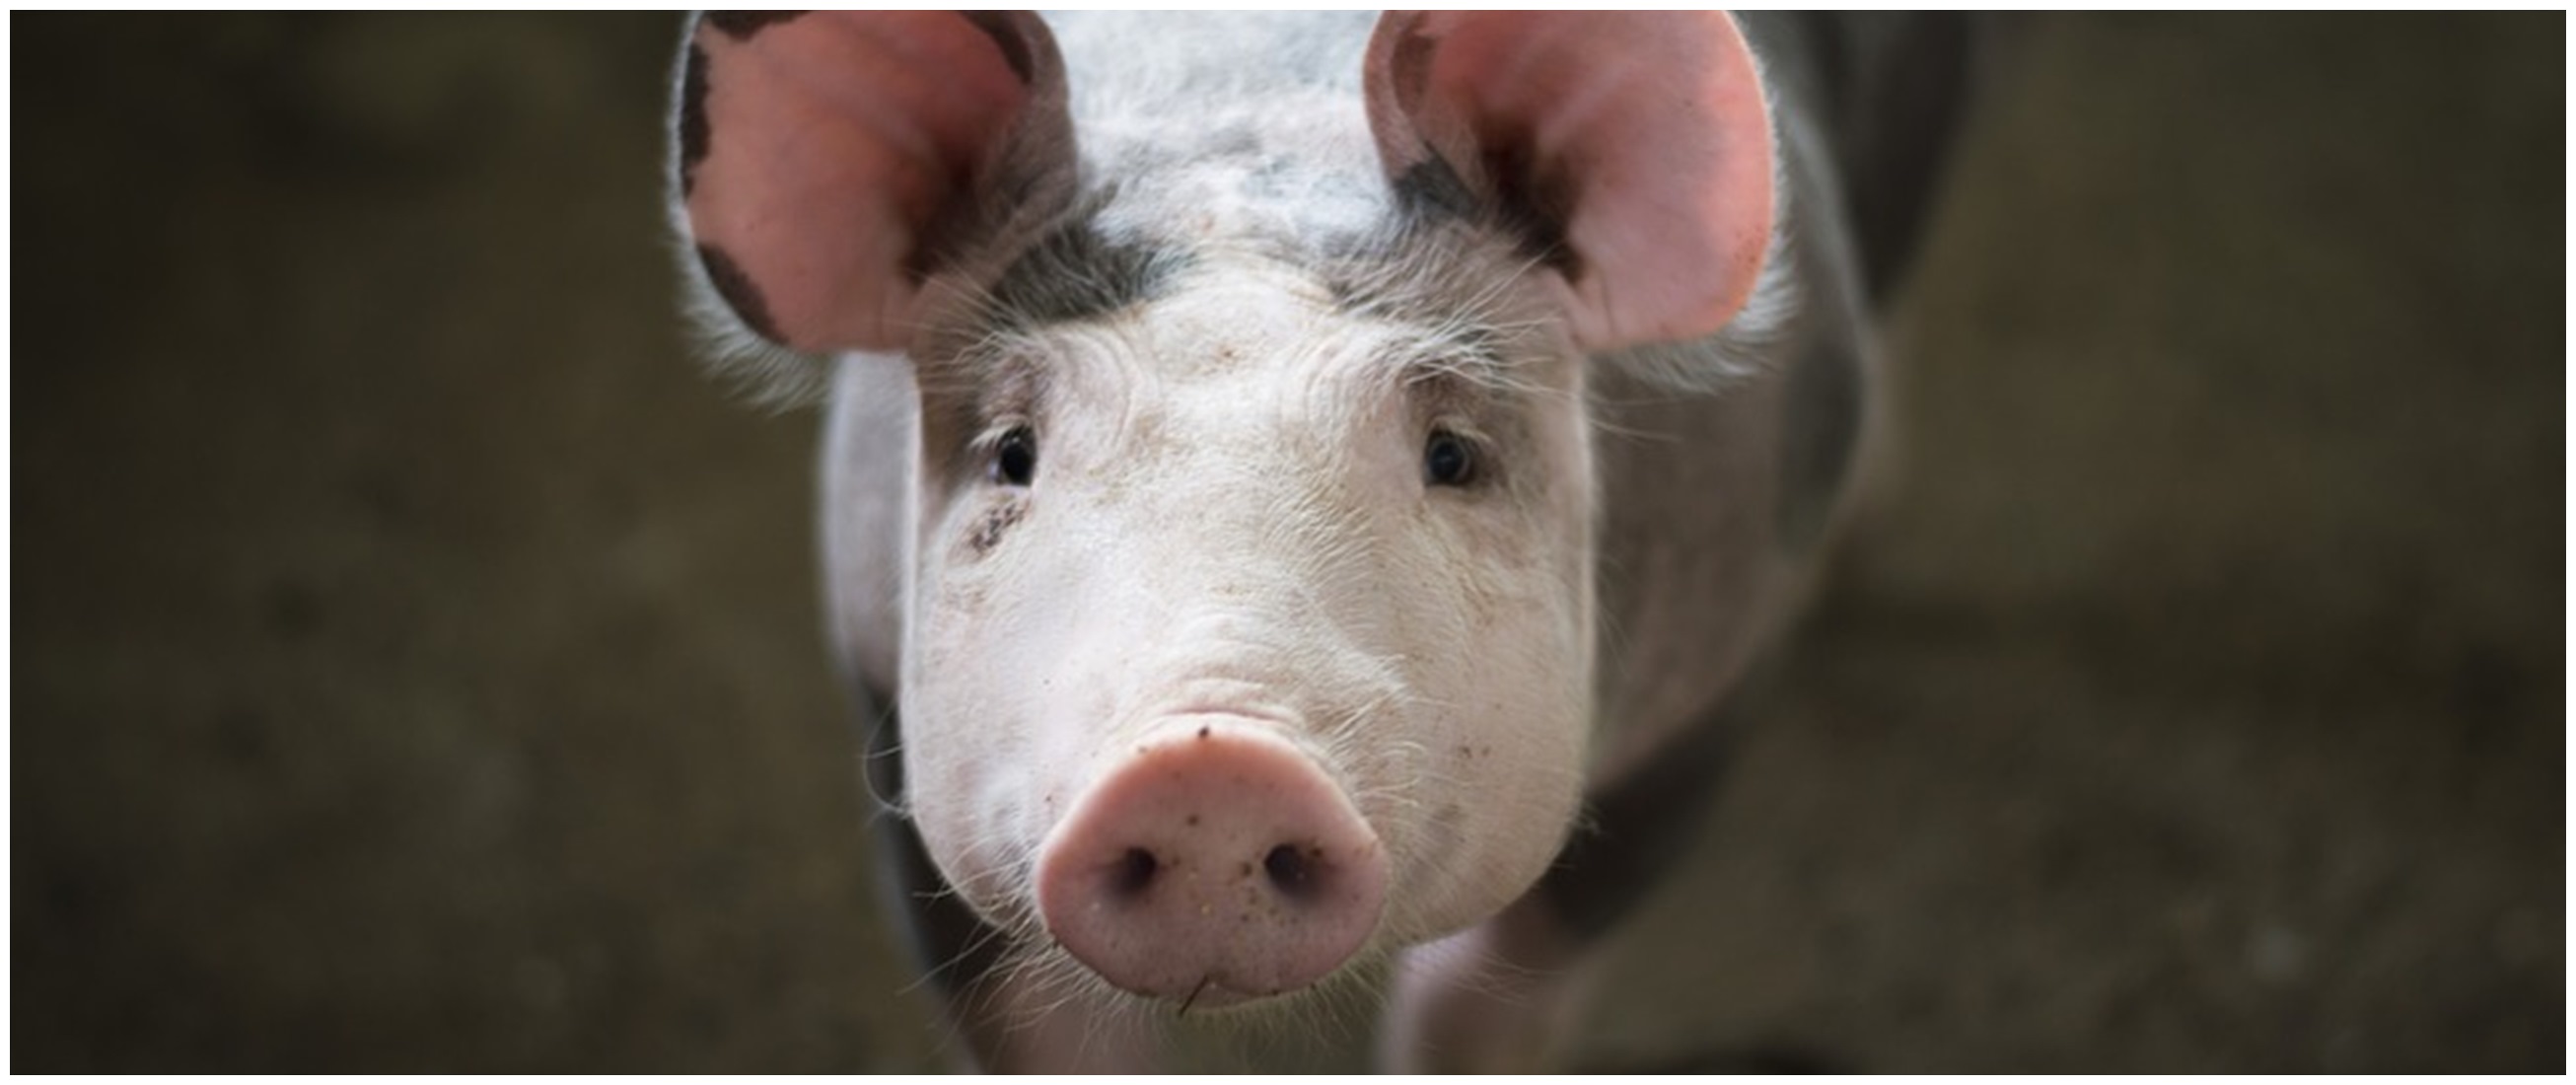 Cetak sejarah, ahli bedah transplantasi jantung babi ke manusia